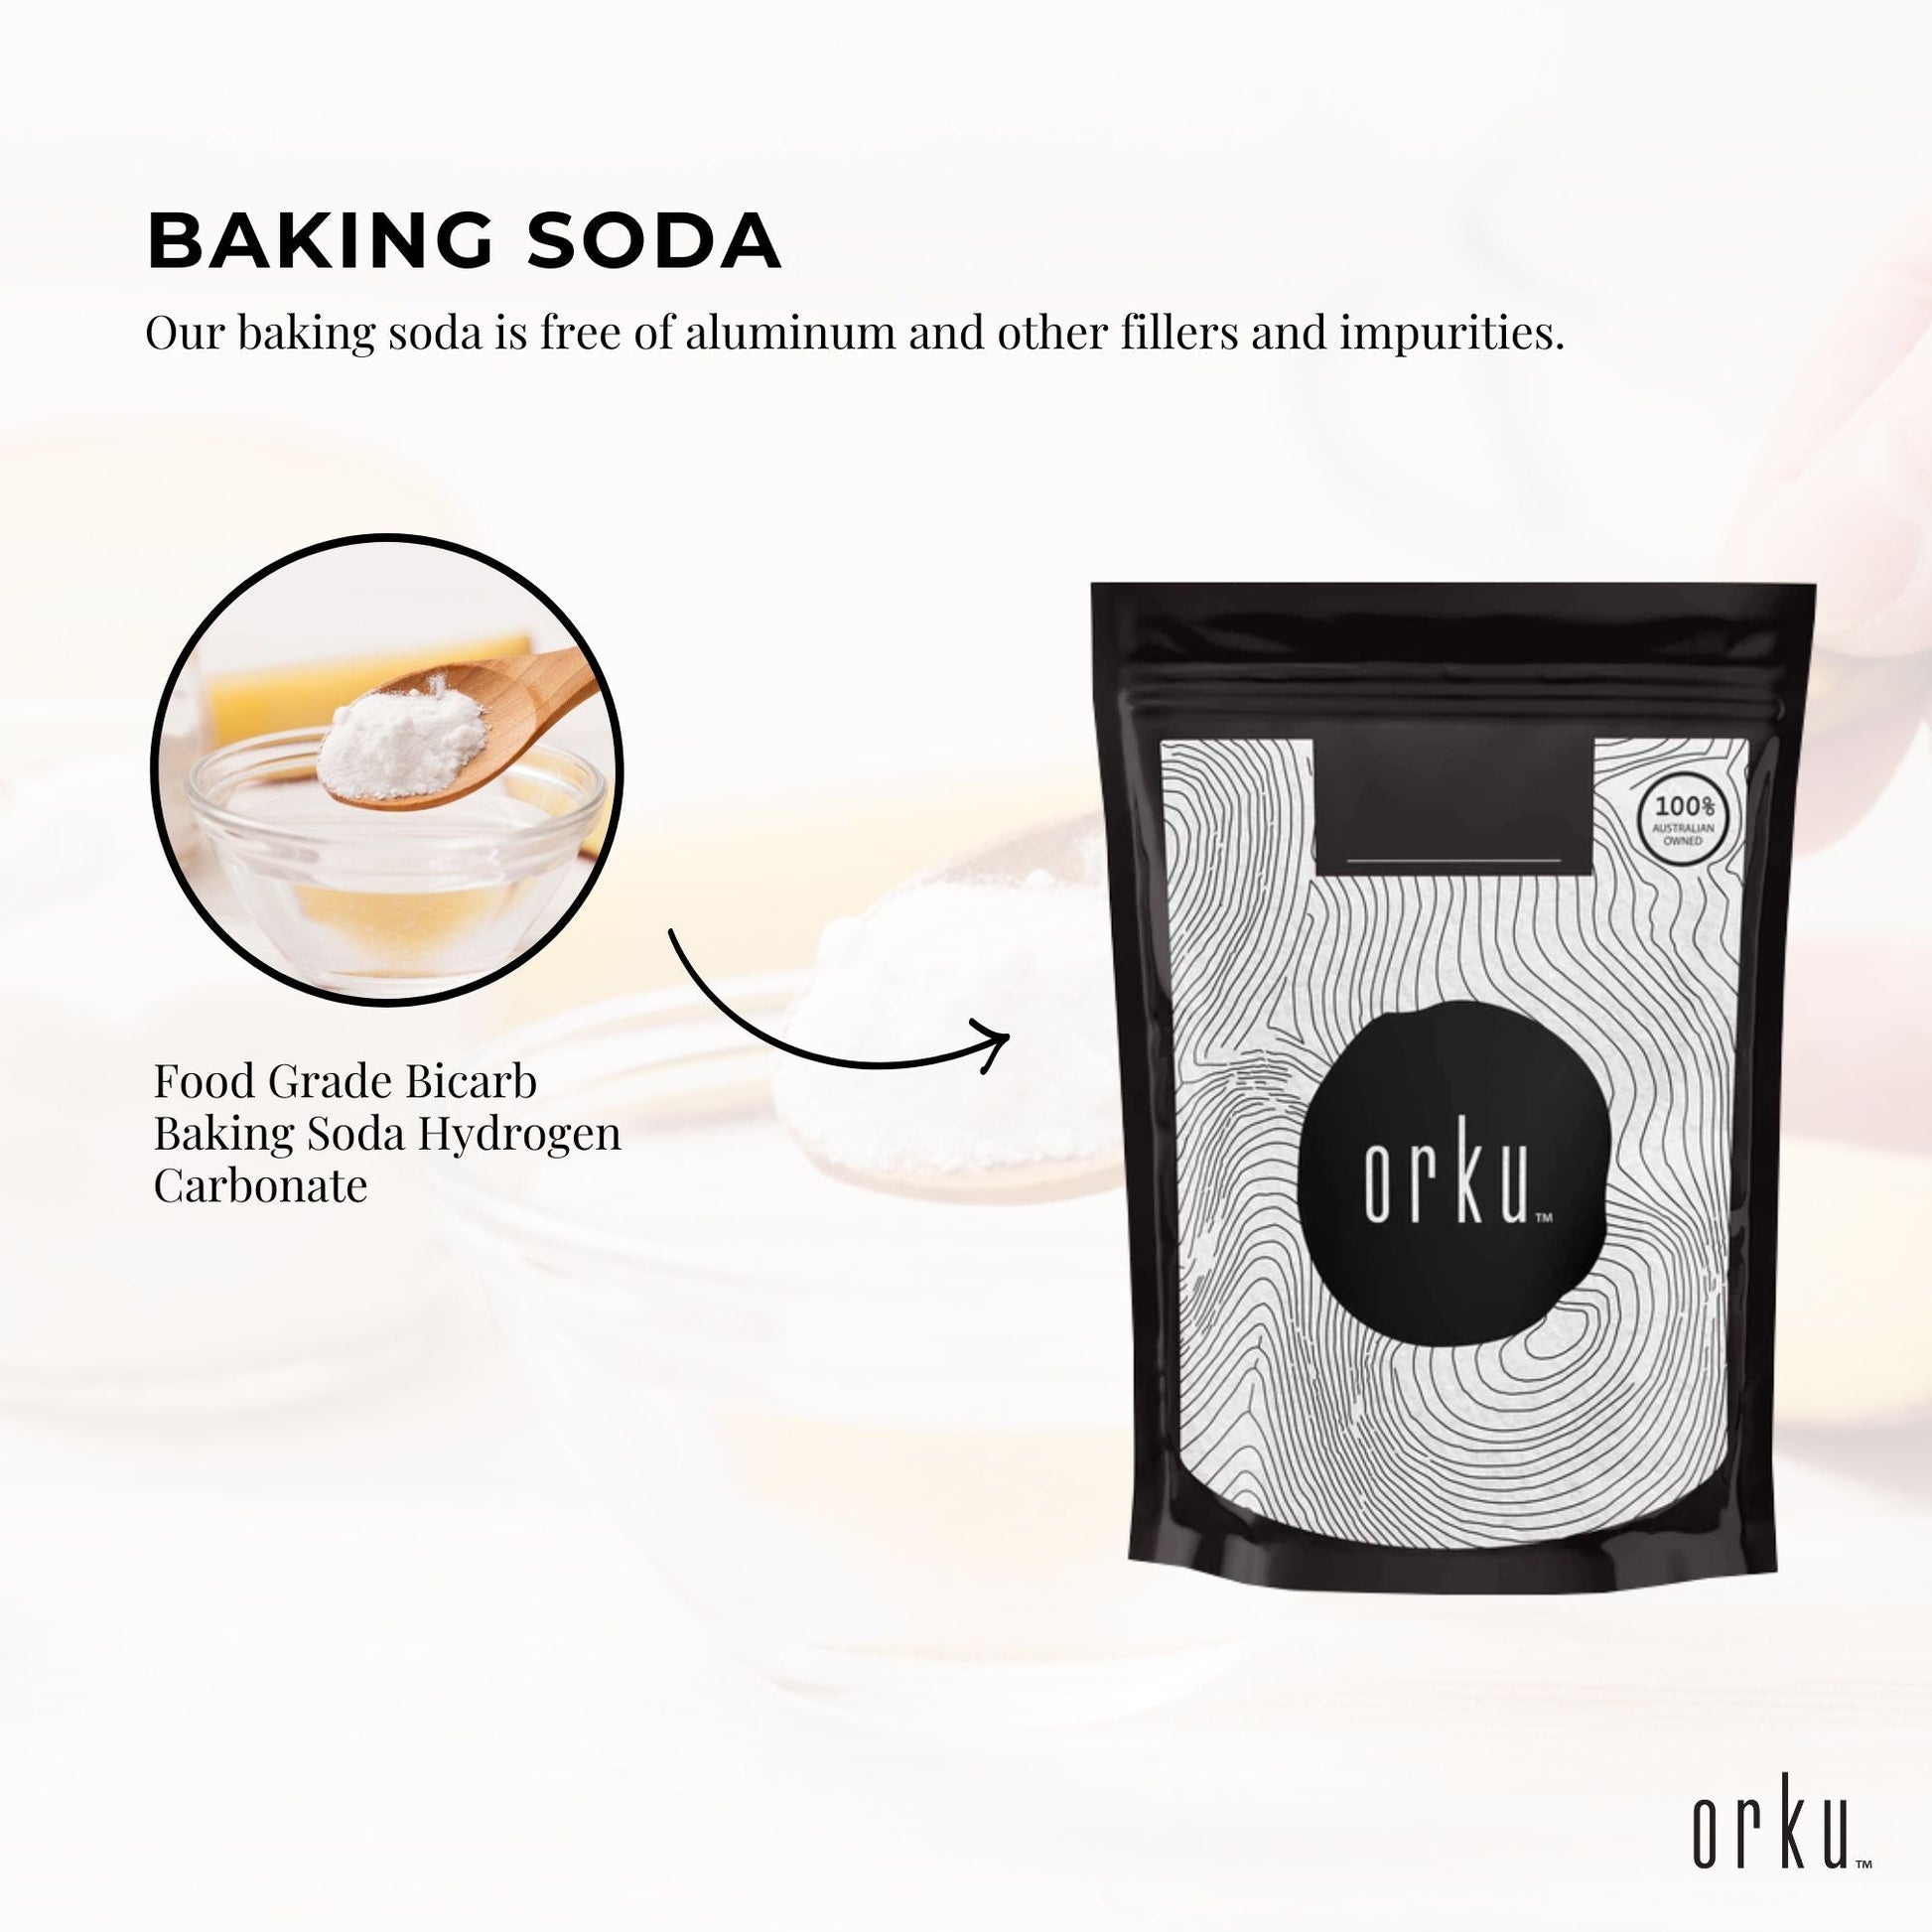 400g Sodium Bicarbonate - Food Grade Bicarb Baking Soda Hydrogen Carbonate